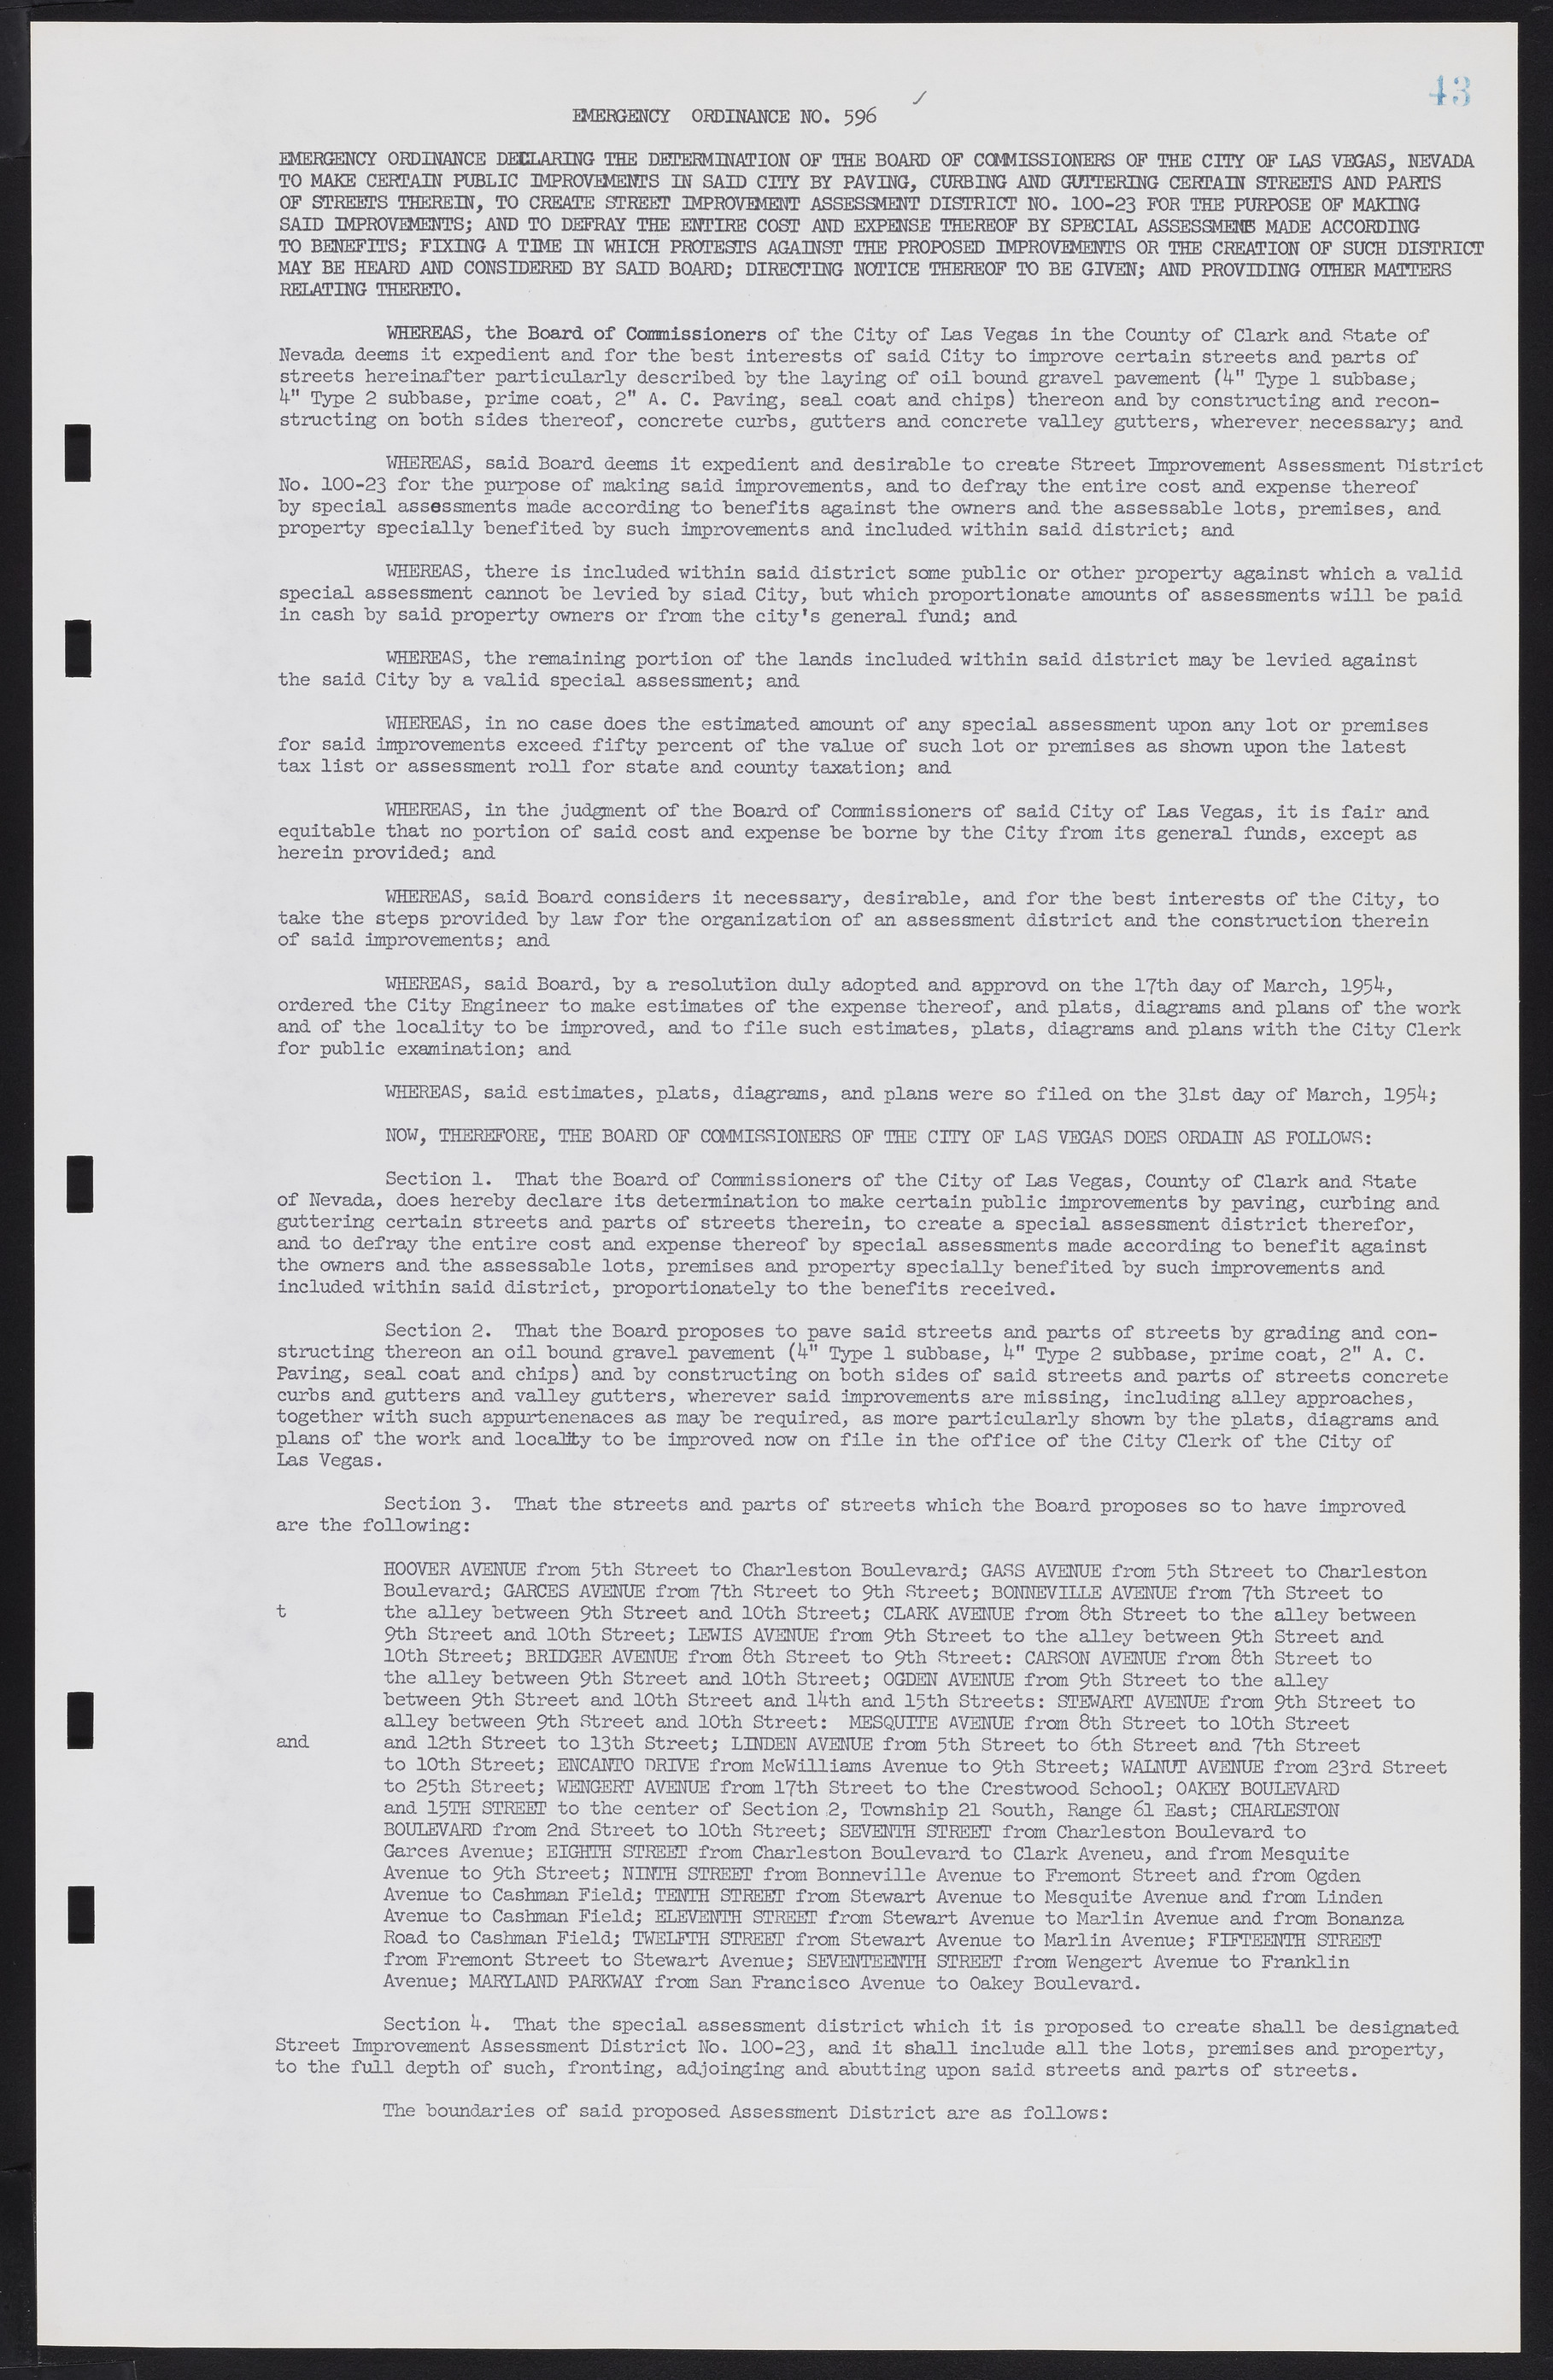 Las Vegas City Commission Minutes, February 17, 1954 to September 21, 1955, lvc000009-47